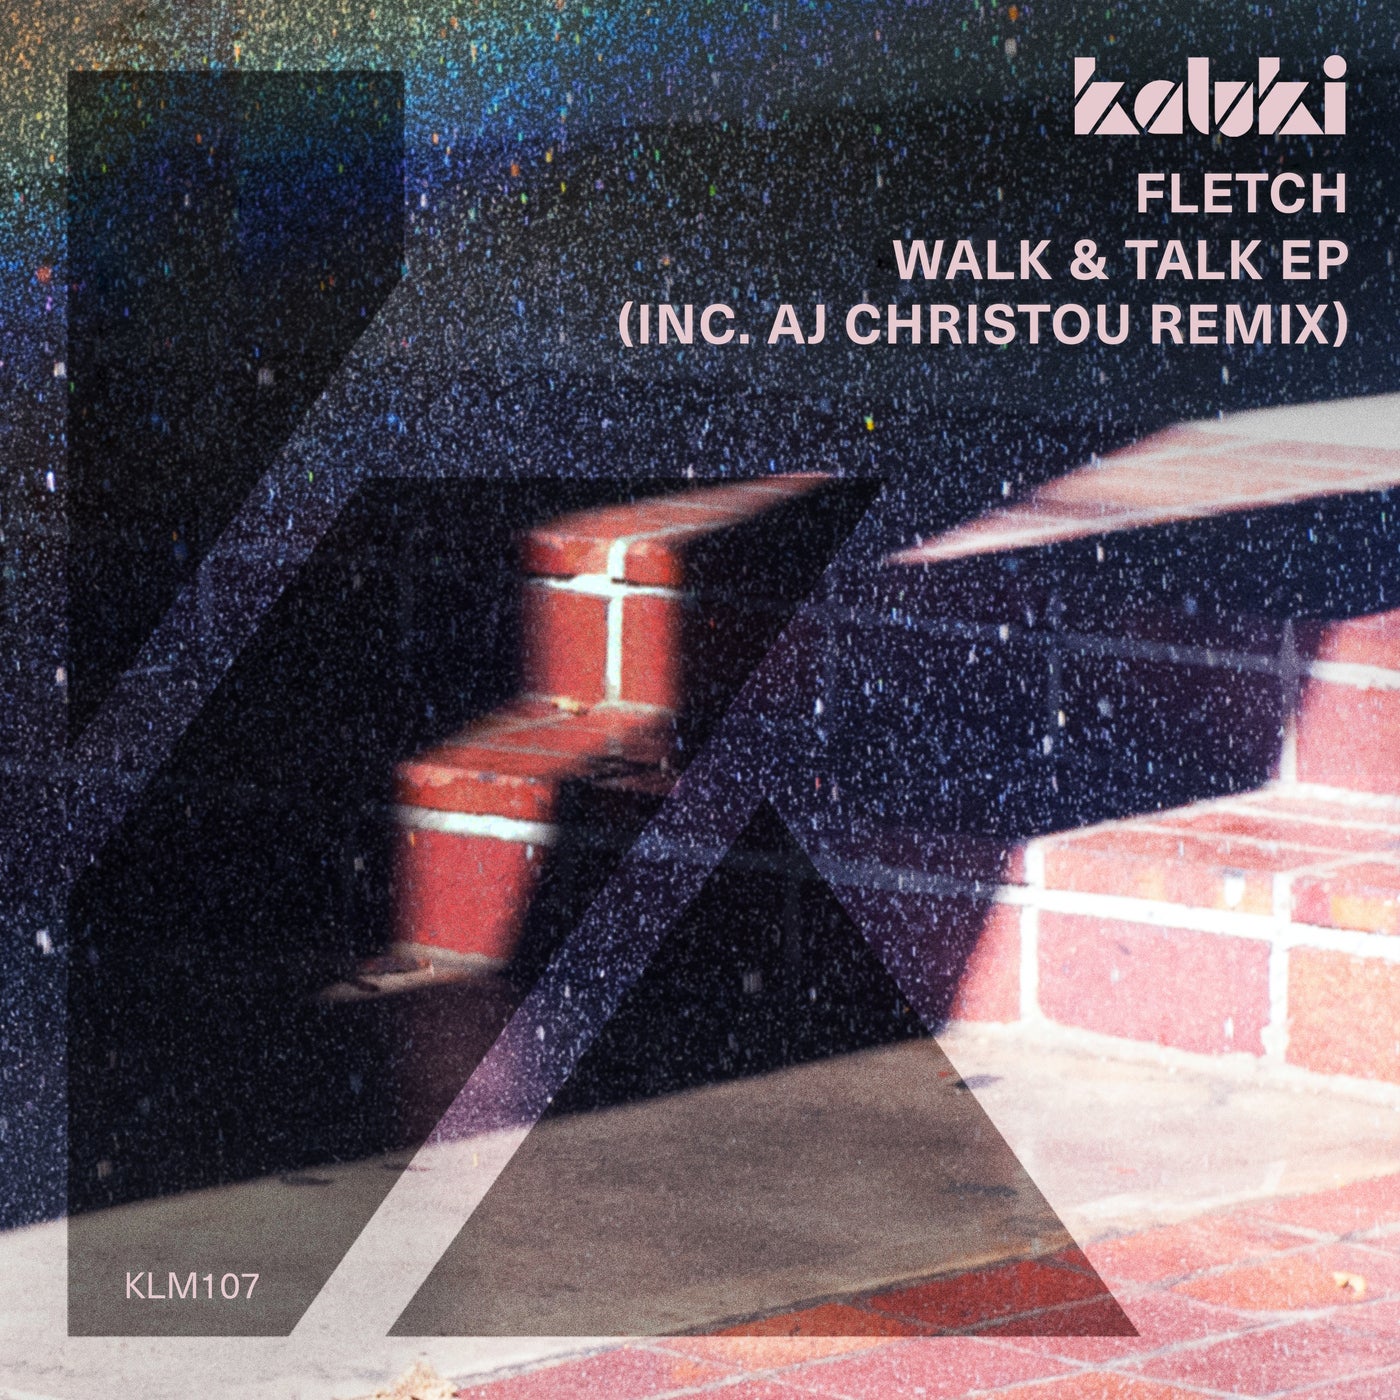 Download Walk & Talk EP on Electrobuzz